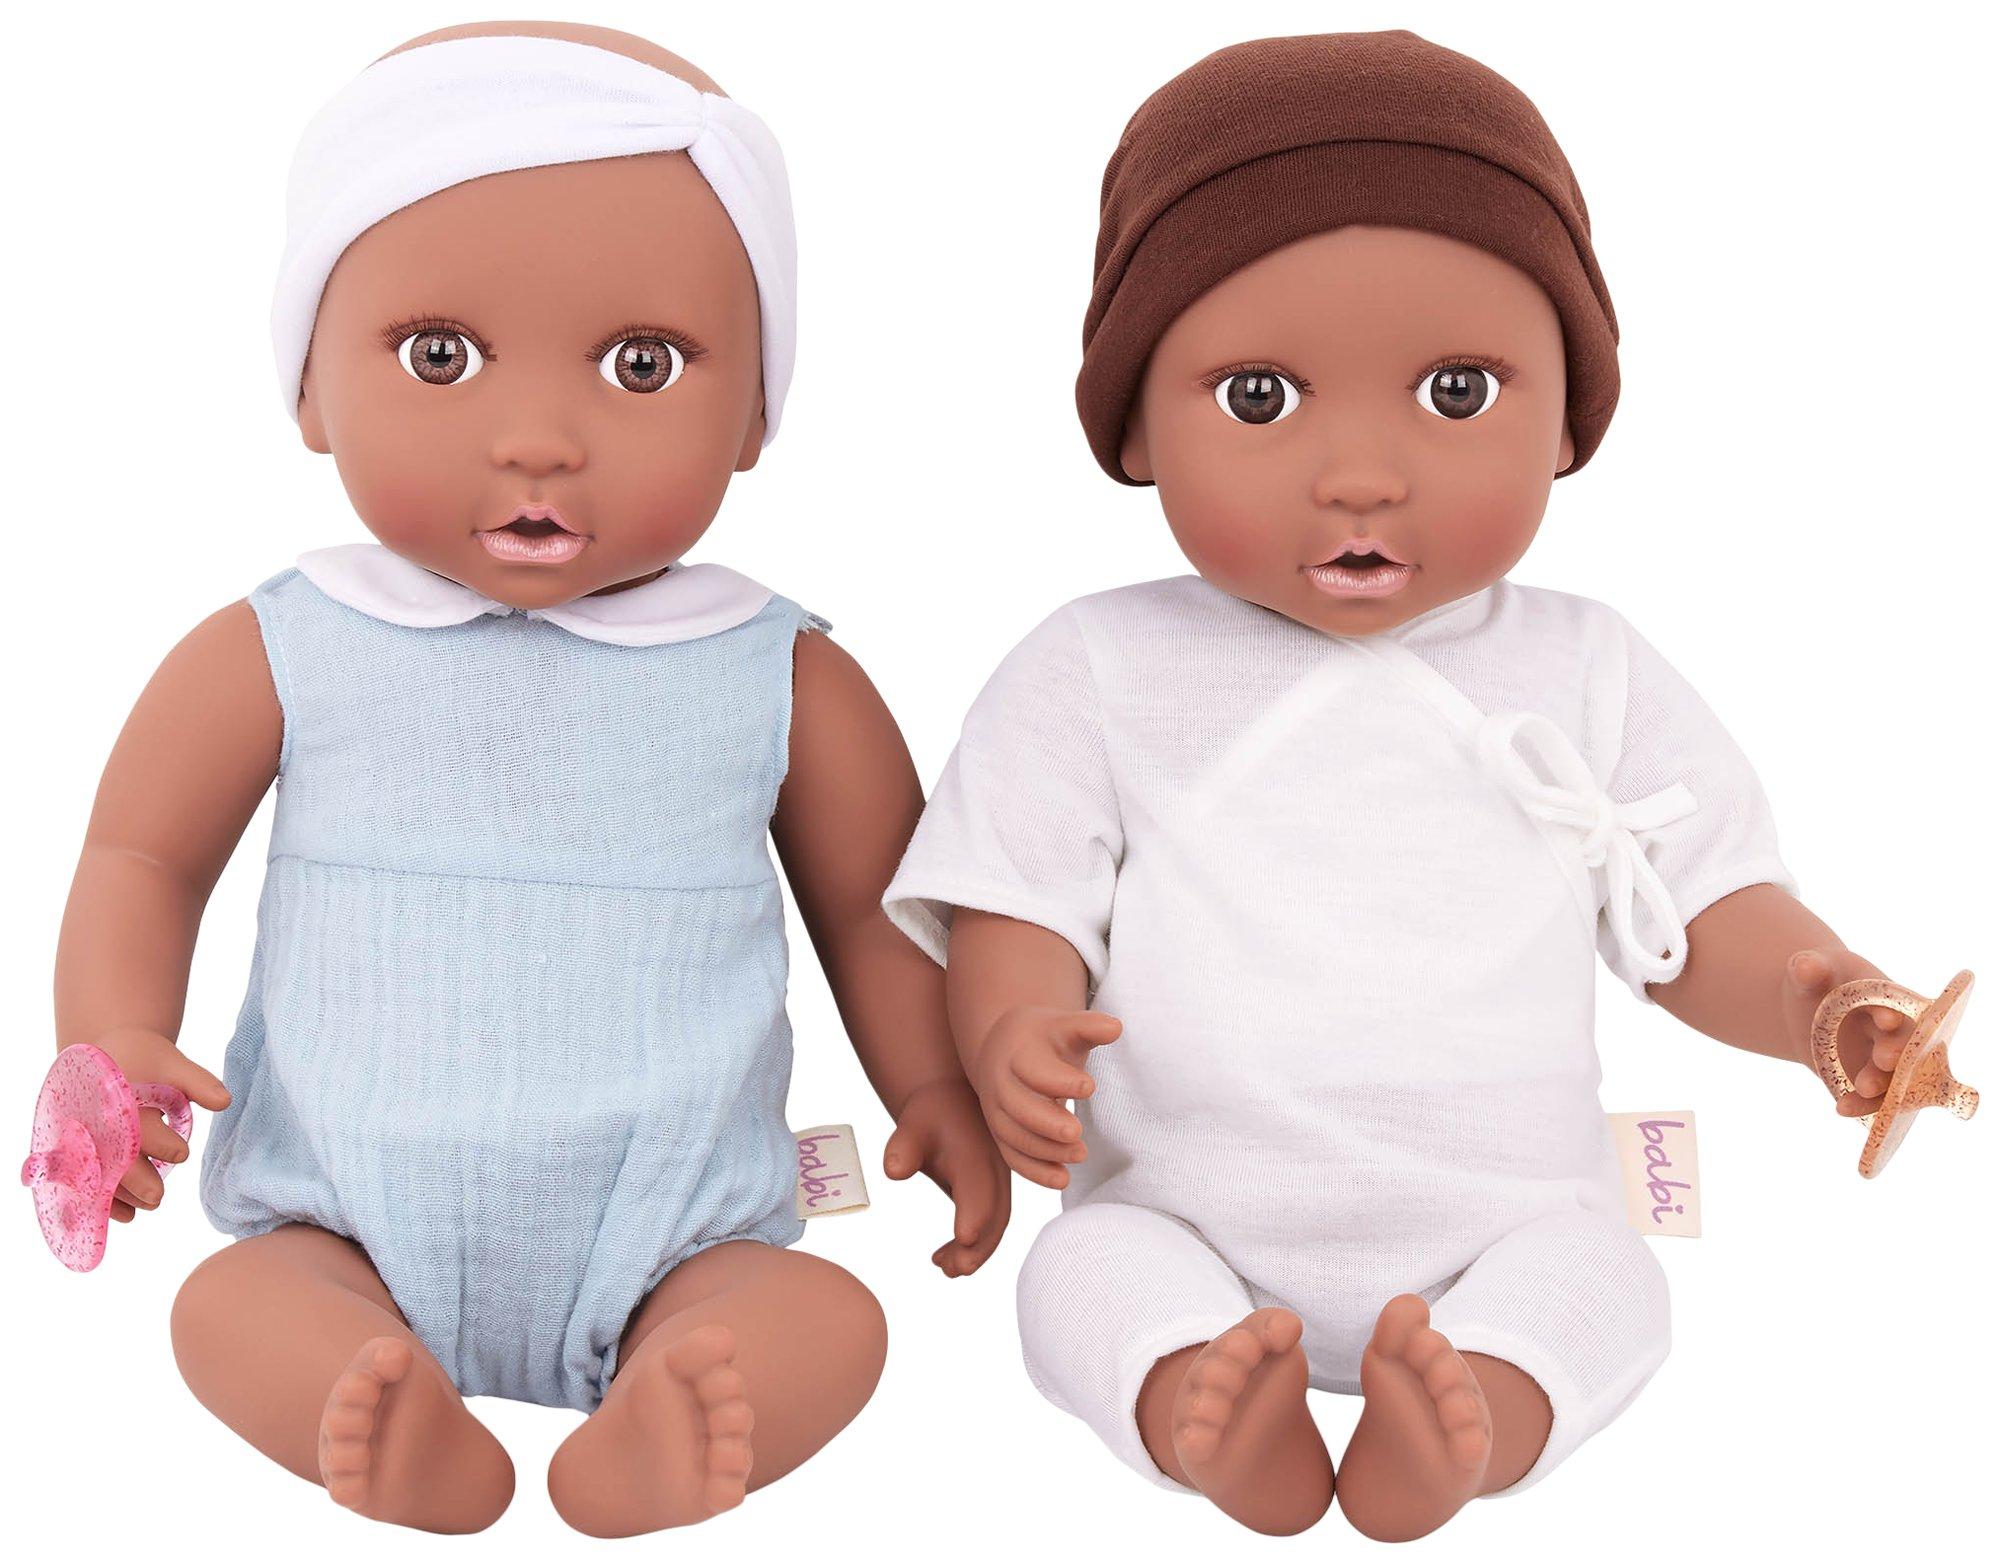 BABI by Battat Set of 2 Baby Twins 14 Newborn Dolls